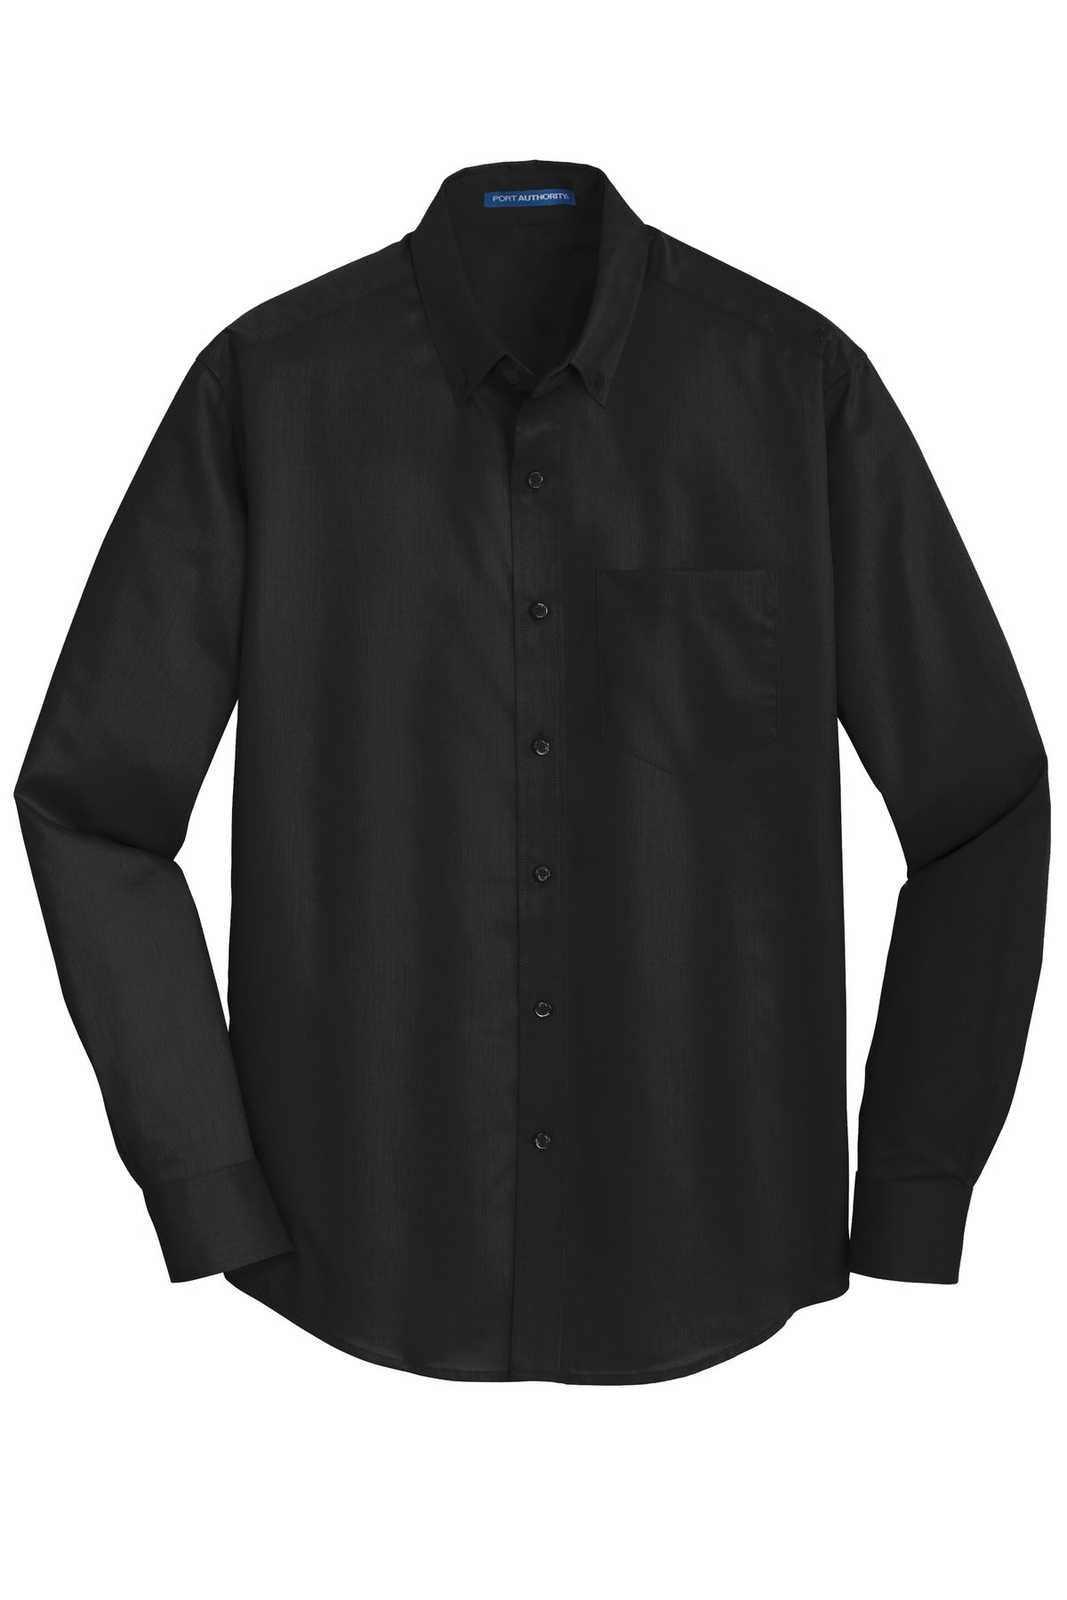 Port Authority S663 Superpro Twill Shirt - Black - HIT a Double - 5